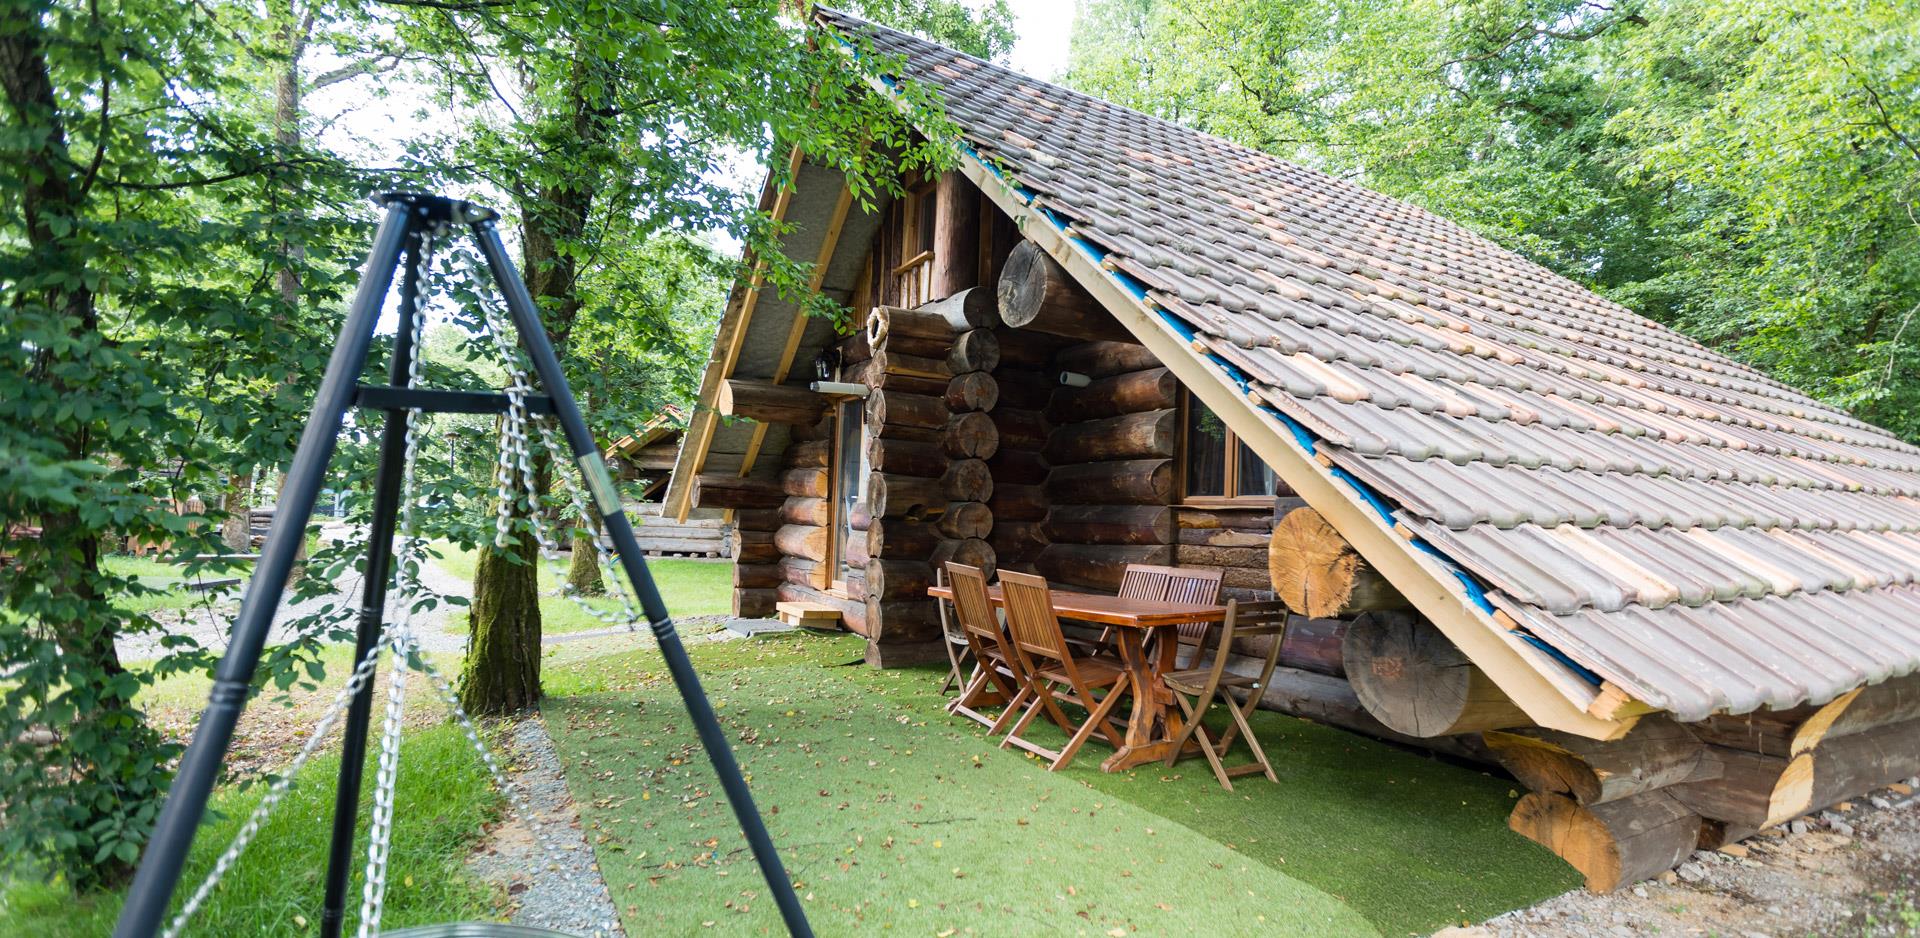 Location camping Haut-Rhin